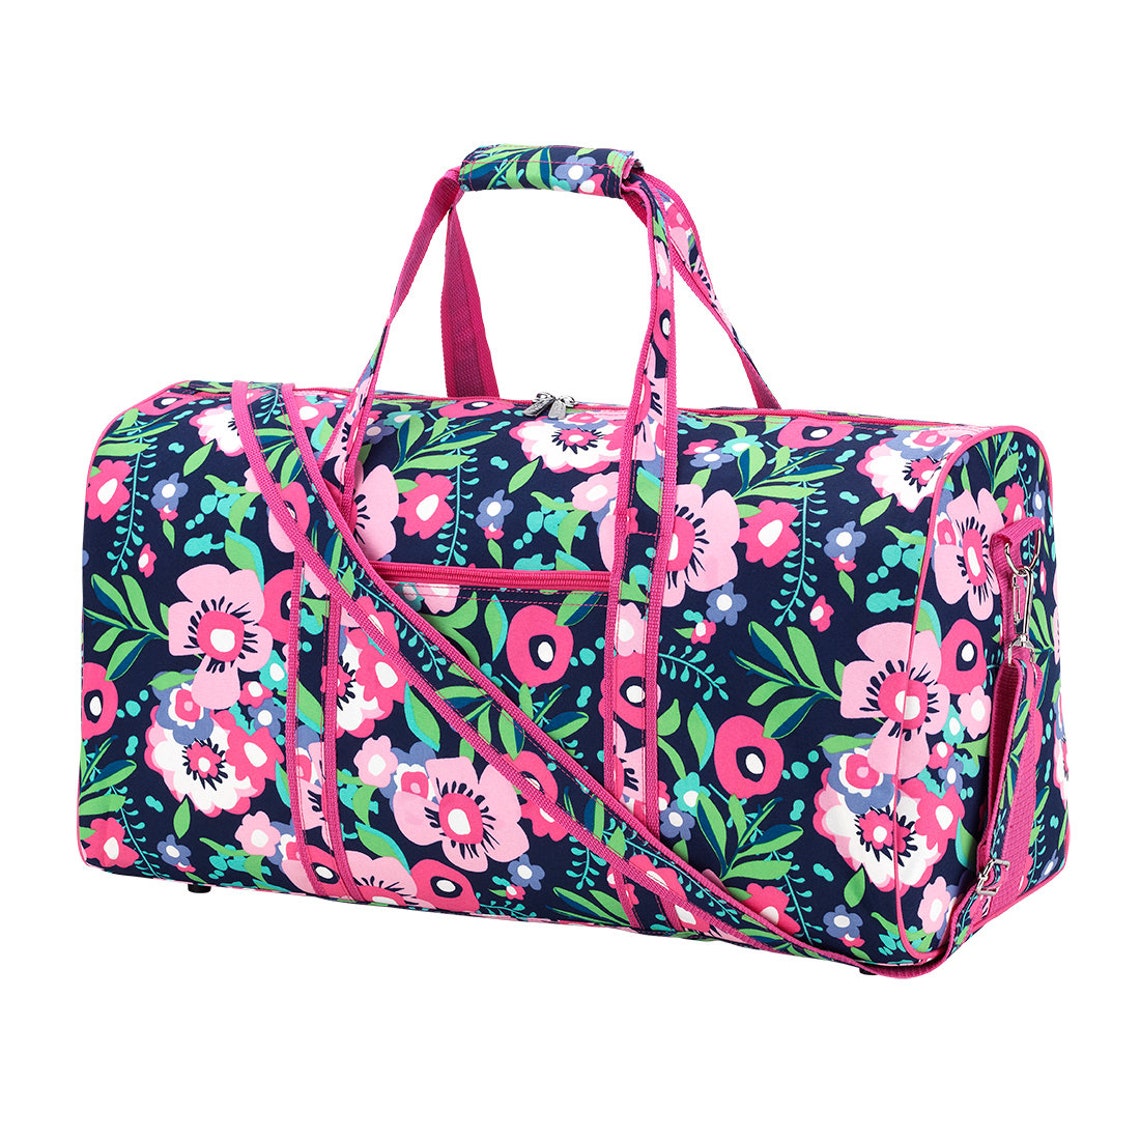 Overnight Bag with shoulder strap. Pink Tote bag Girls Duffel | Etsy